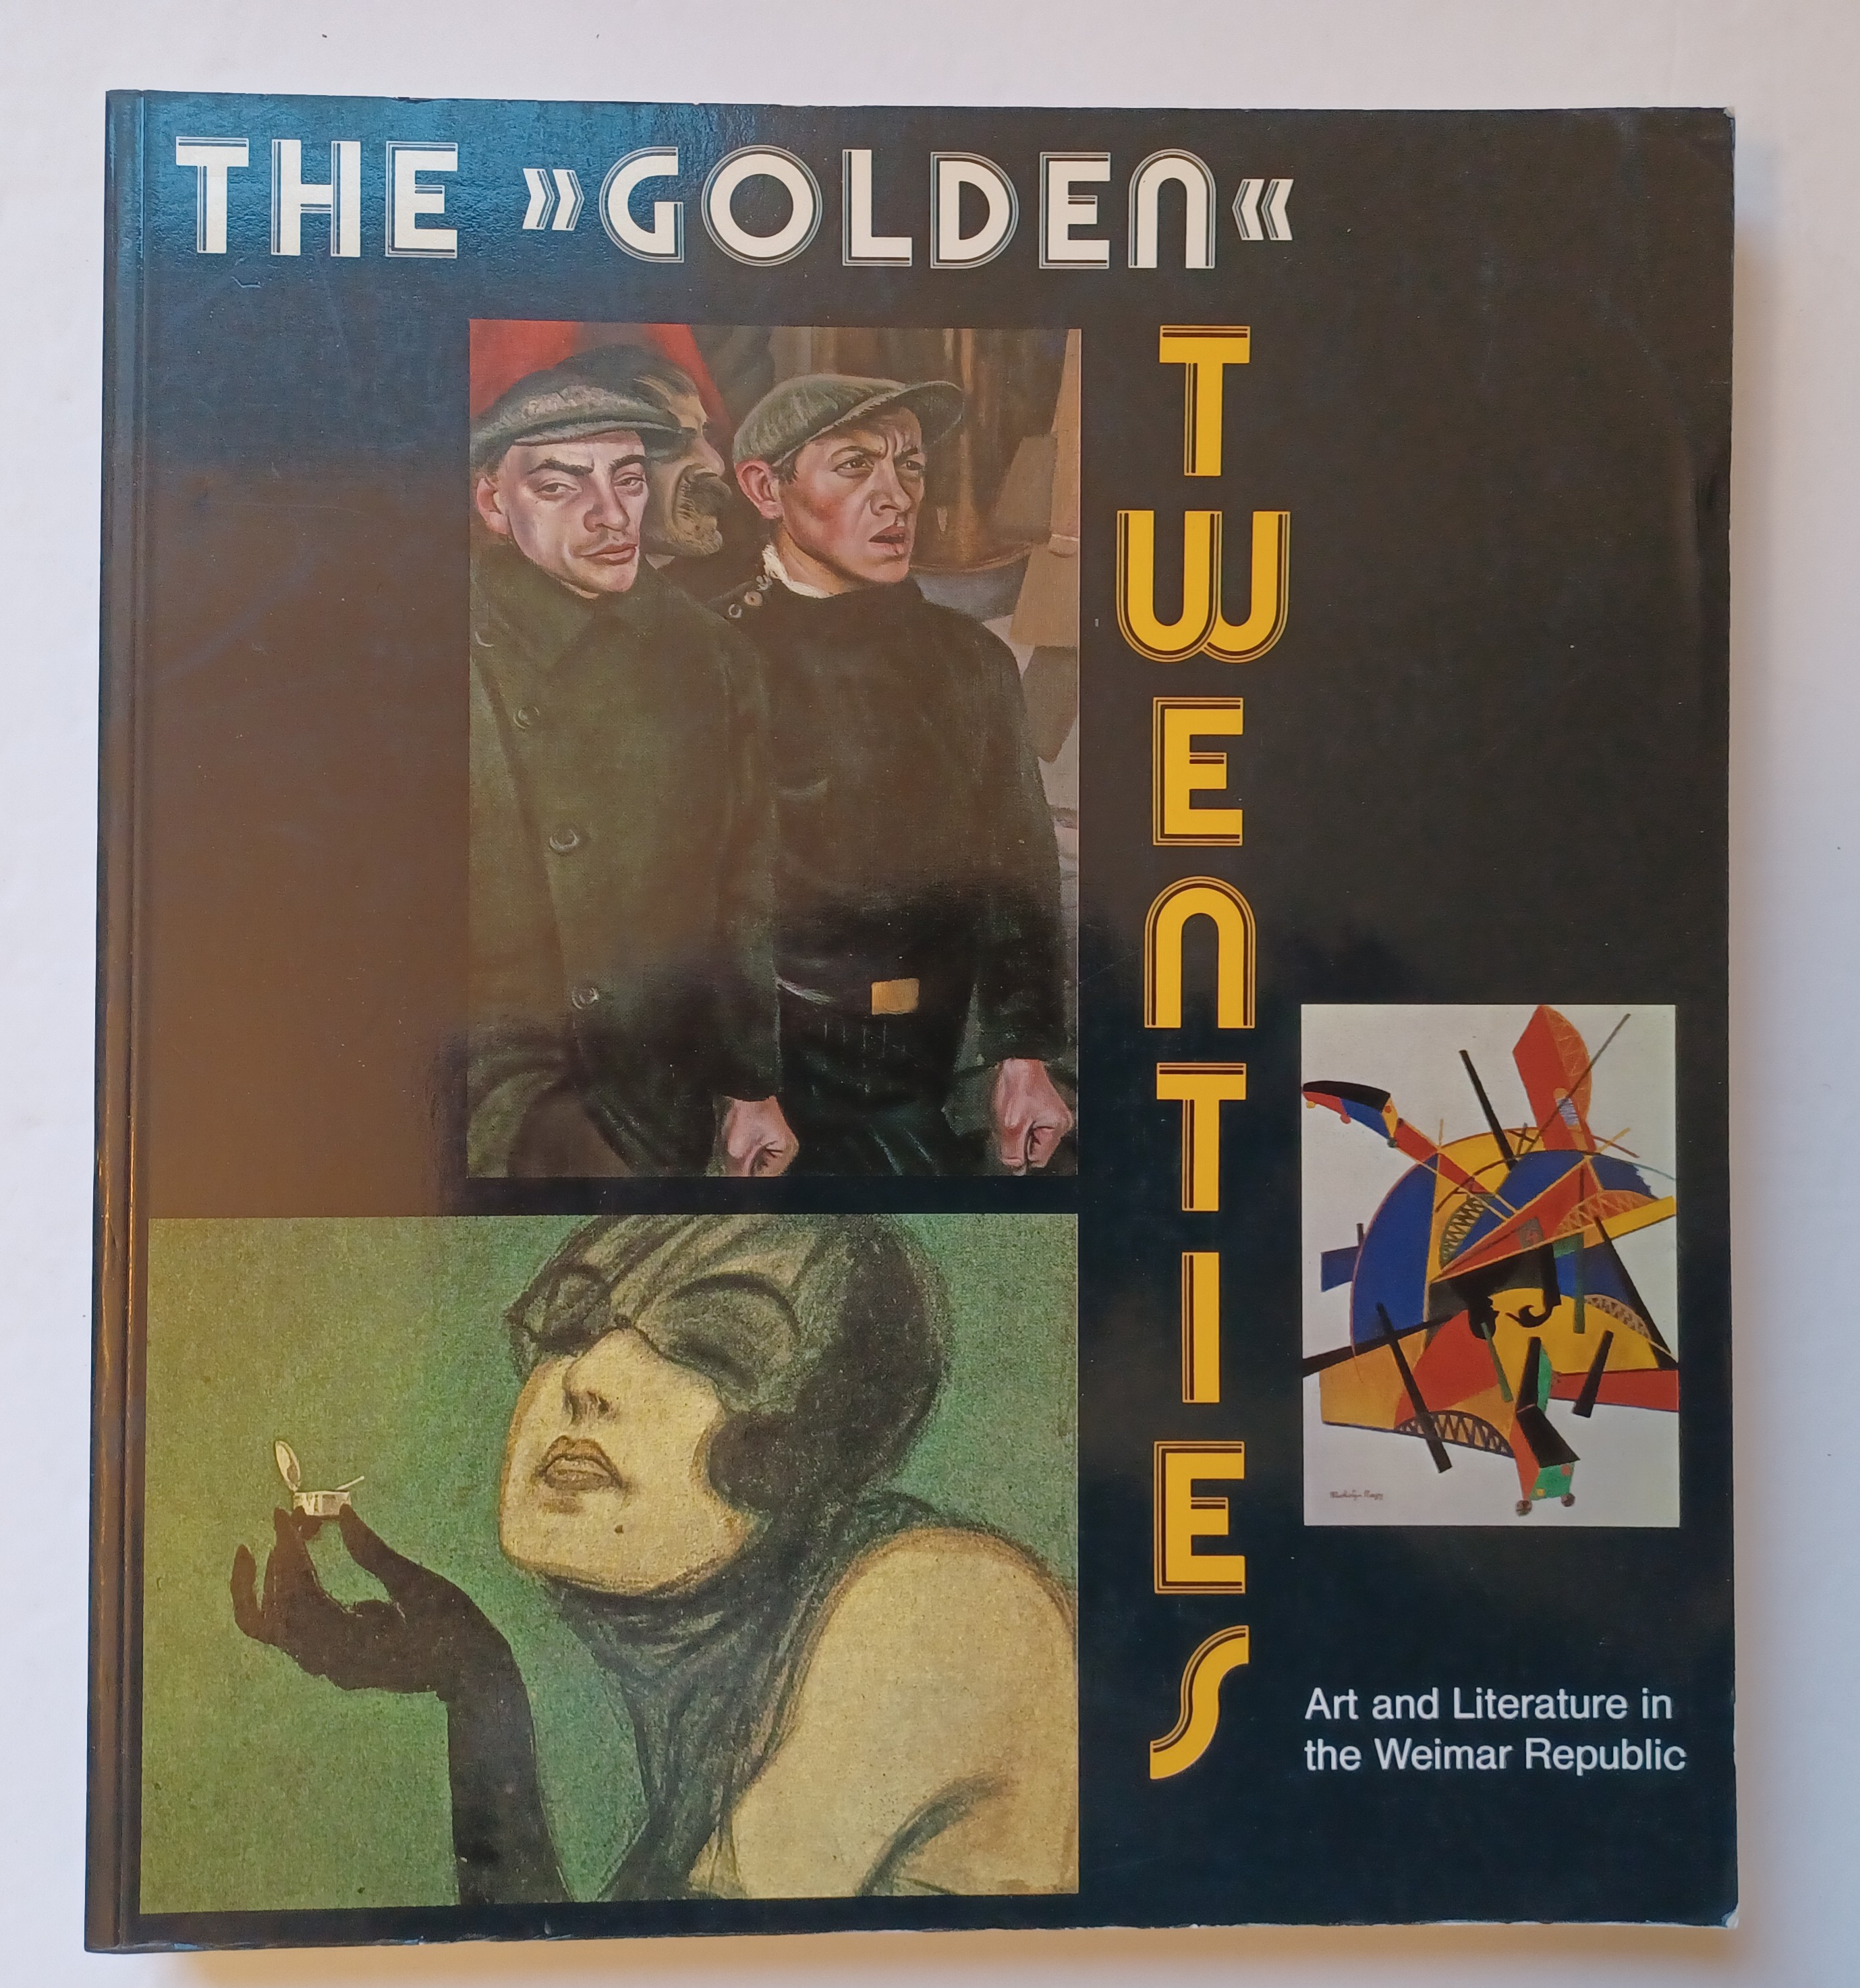 The Golden Twenties: Art and Literature in the Weimar Republic - Schebera, Jurgen; Schrader, Barbel